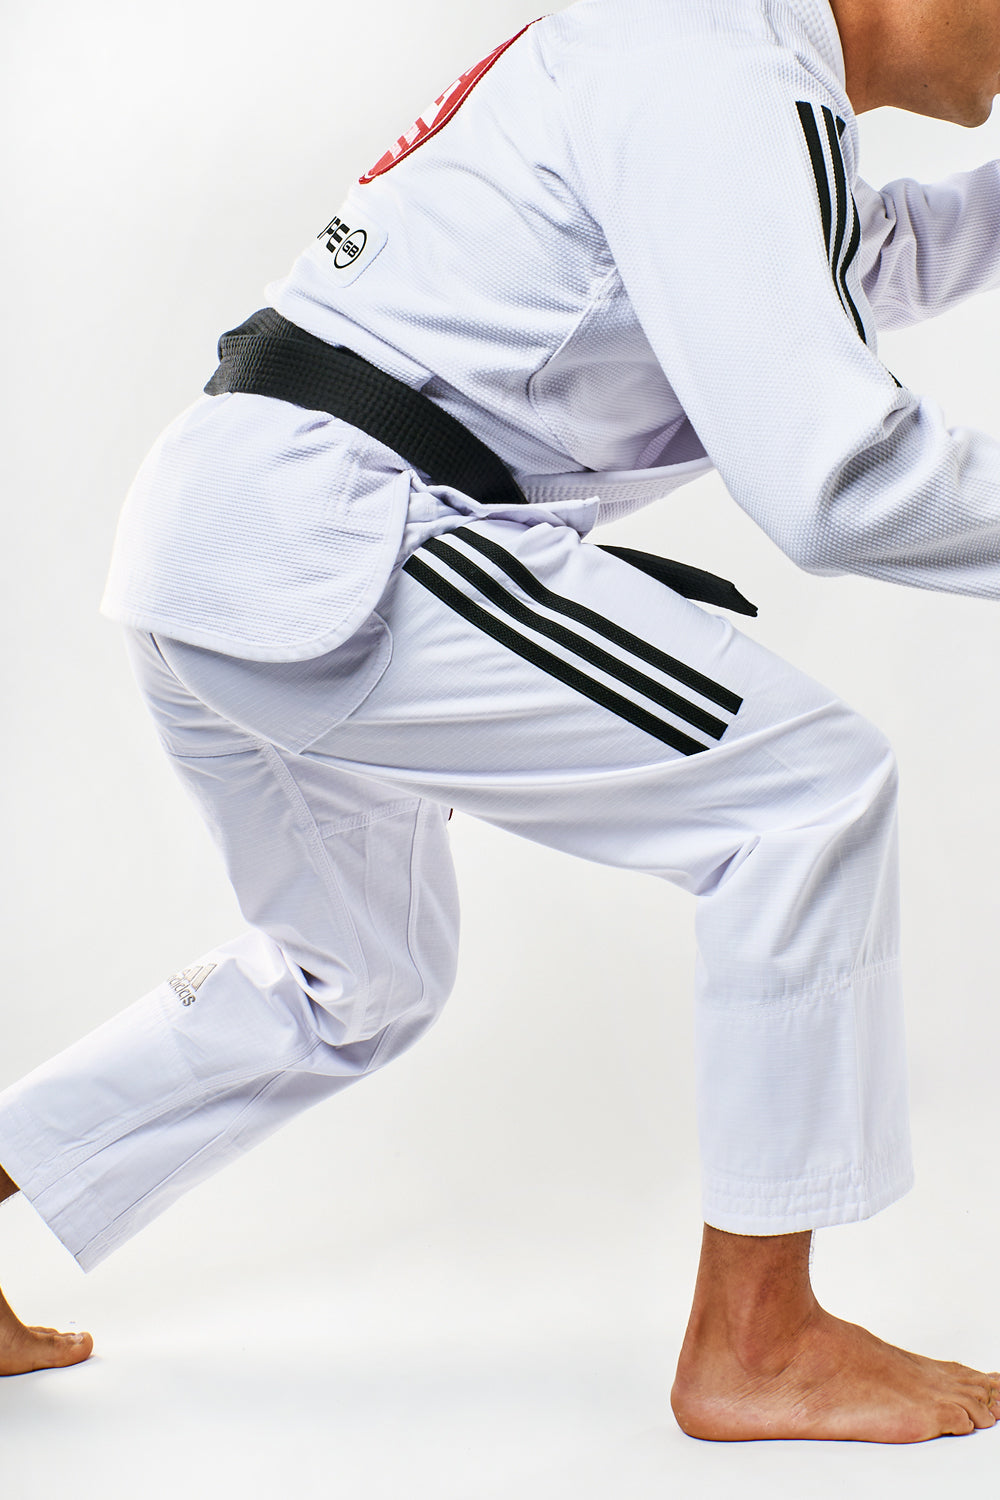 GB Kimono V2 by Adidas White – GB Wear